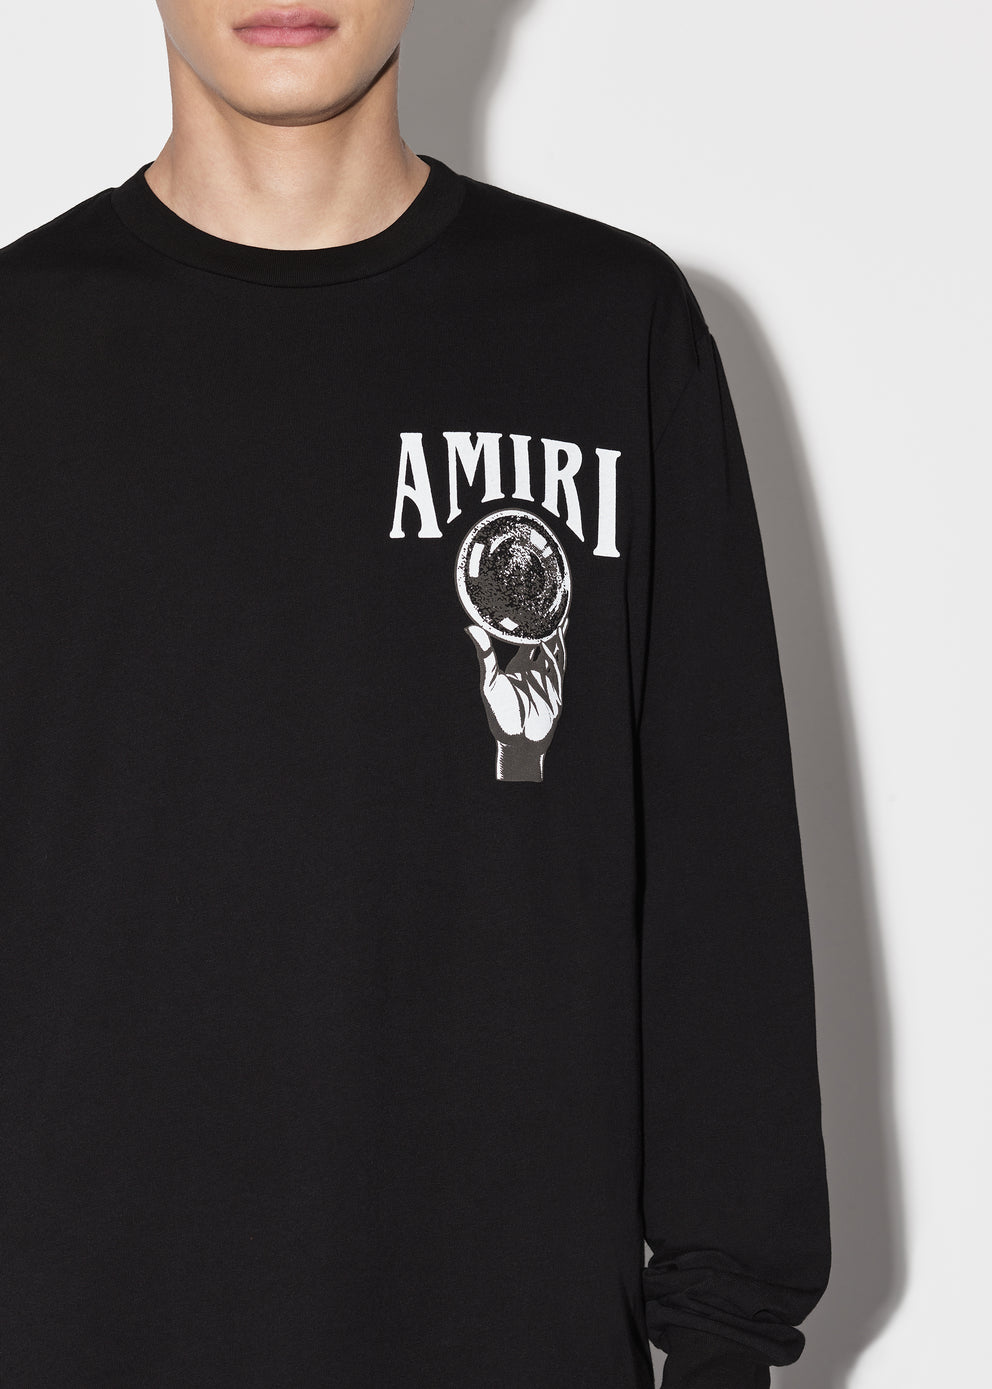 Camisetas Running Amiri Crystal Ball Long Sleeve Hombre Negras | 1298-RHFGE